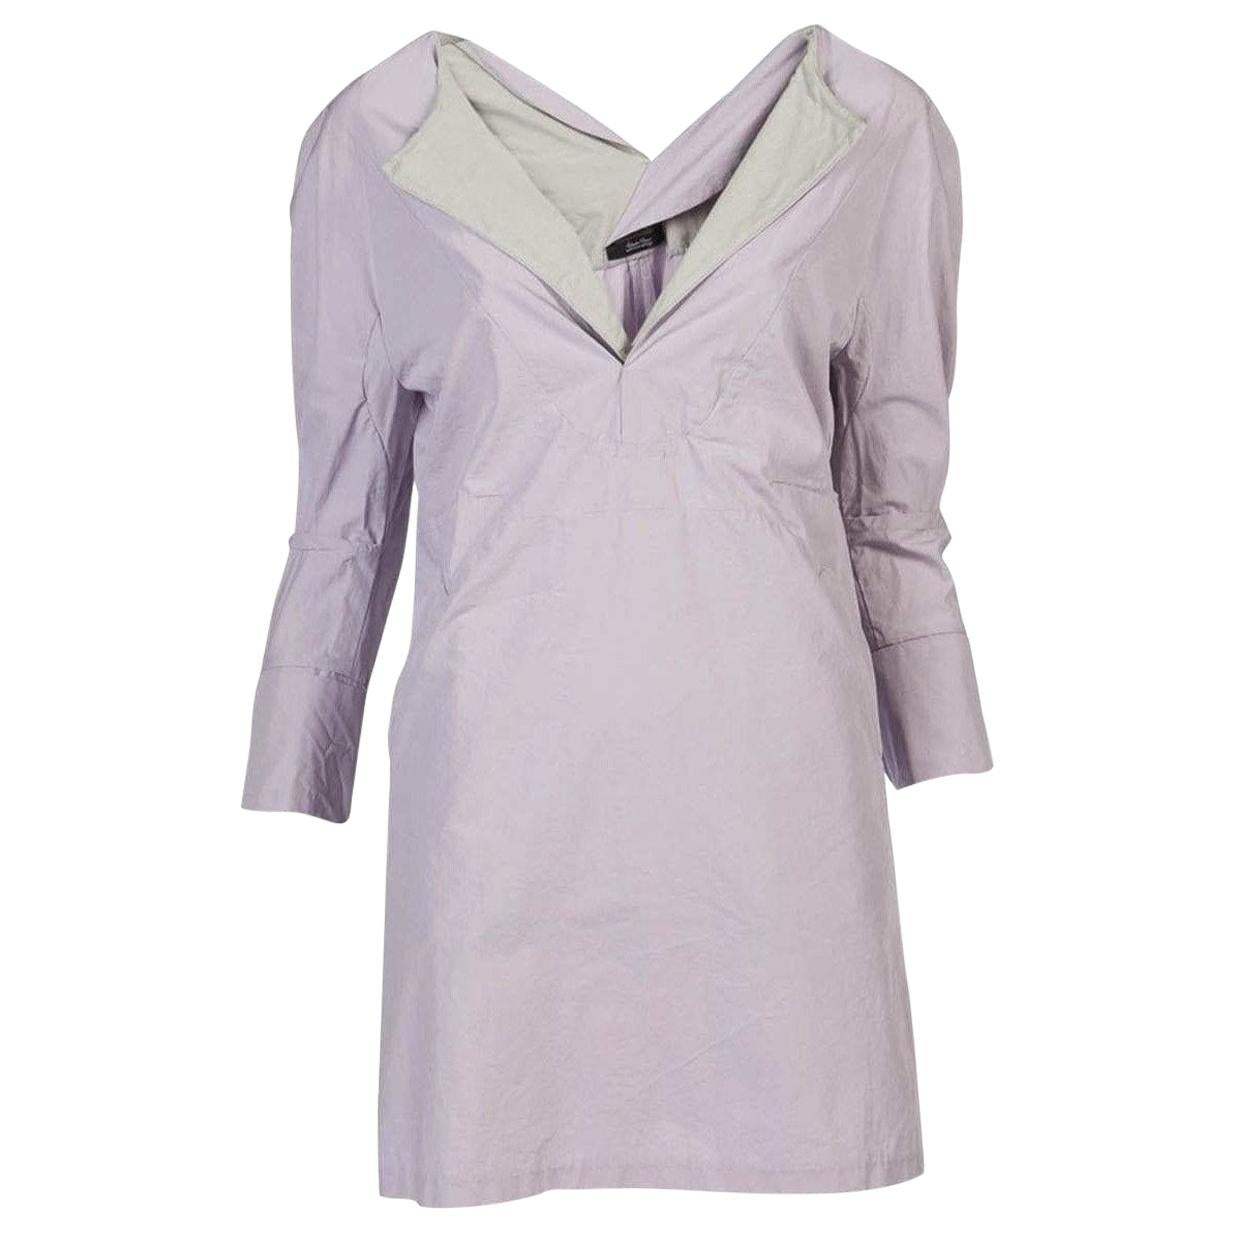 Undercover Lilac Shirt Dress